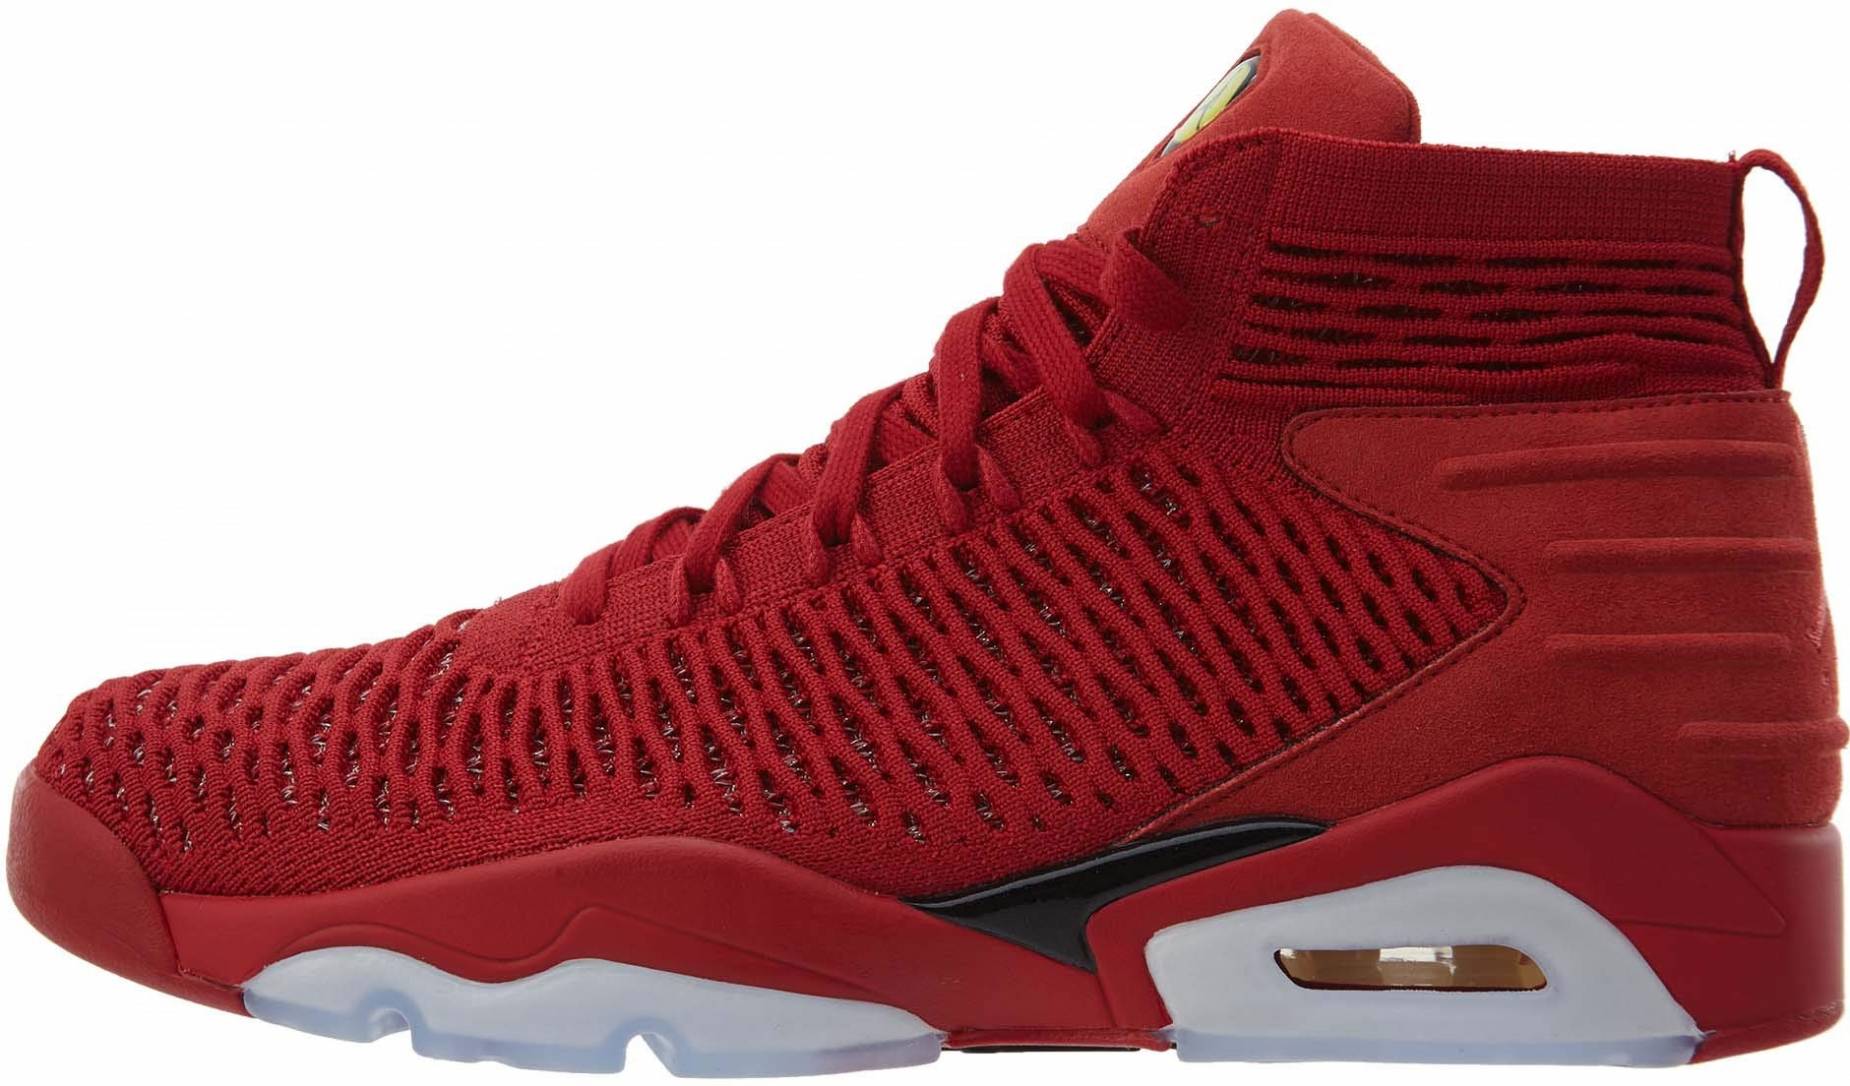 Save 9% on Red Jordan Basketball Shoes 